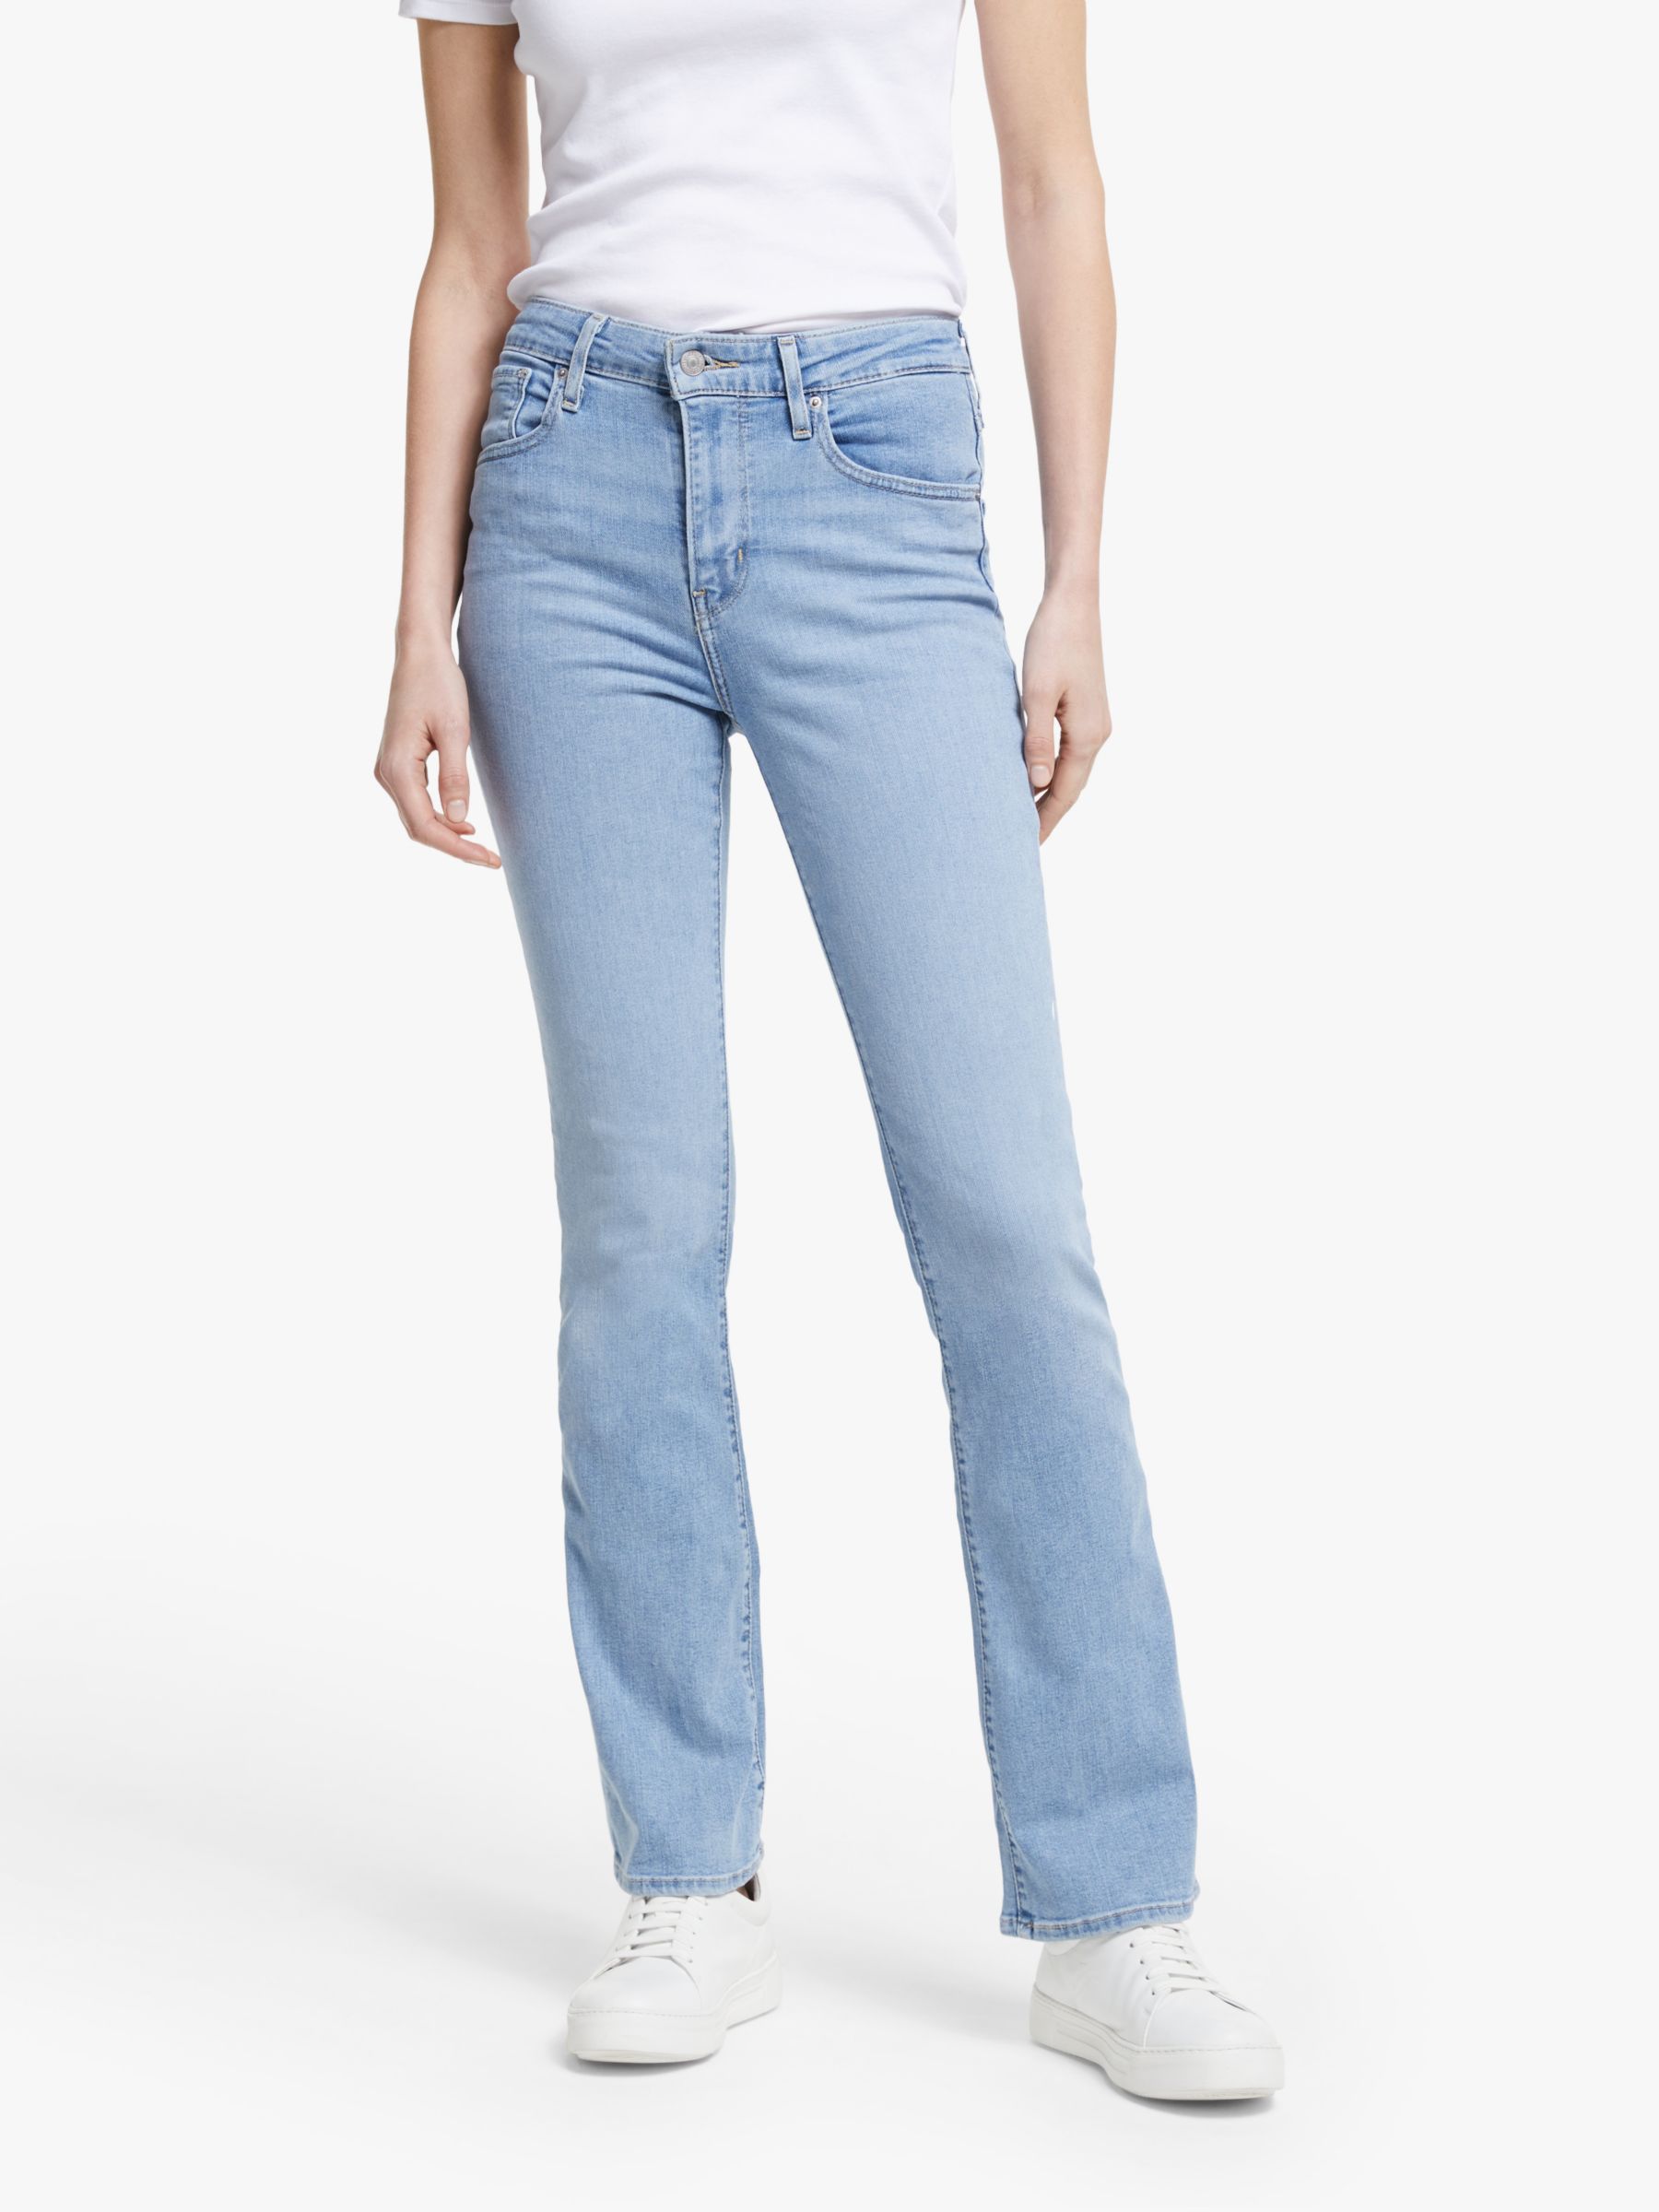 women's boot cut high rise jeans